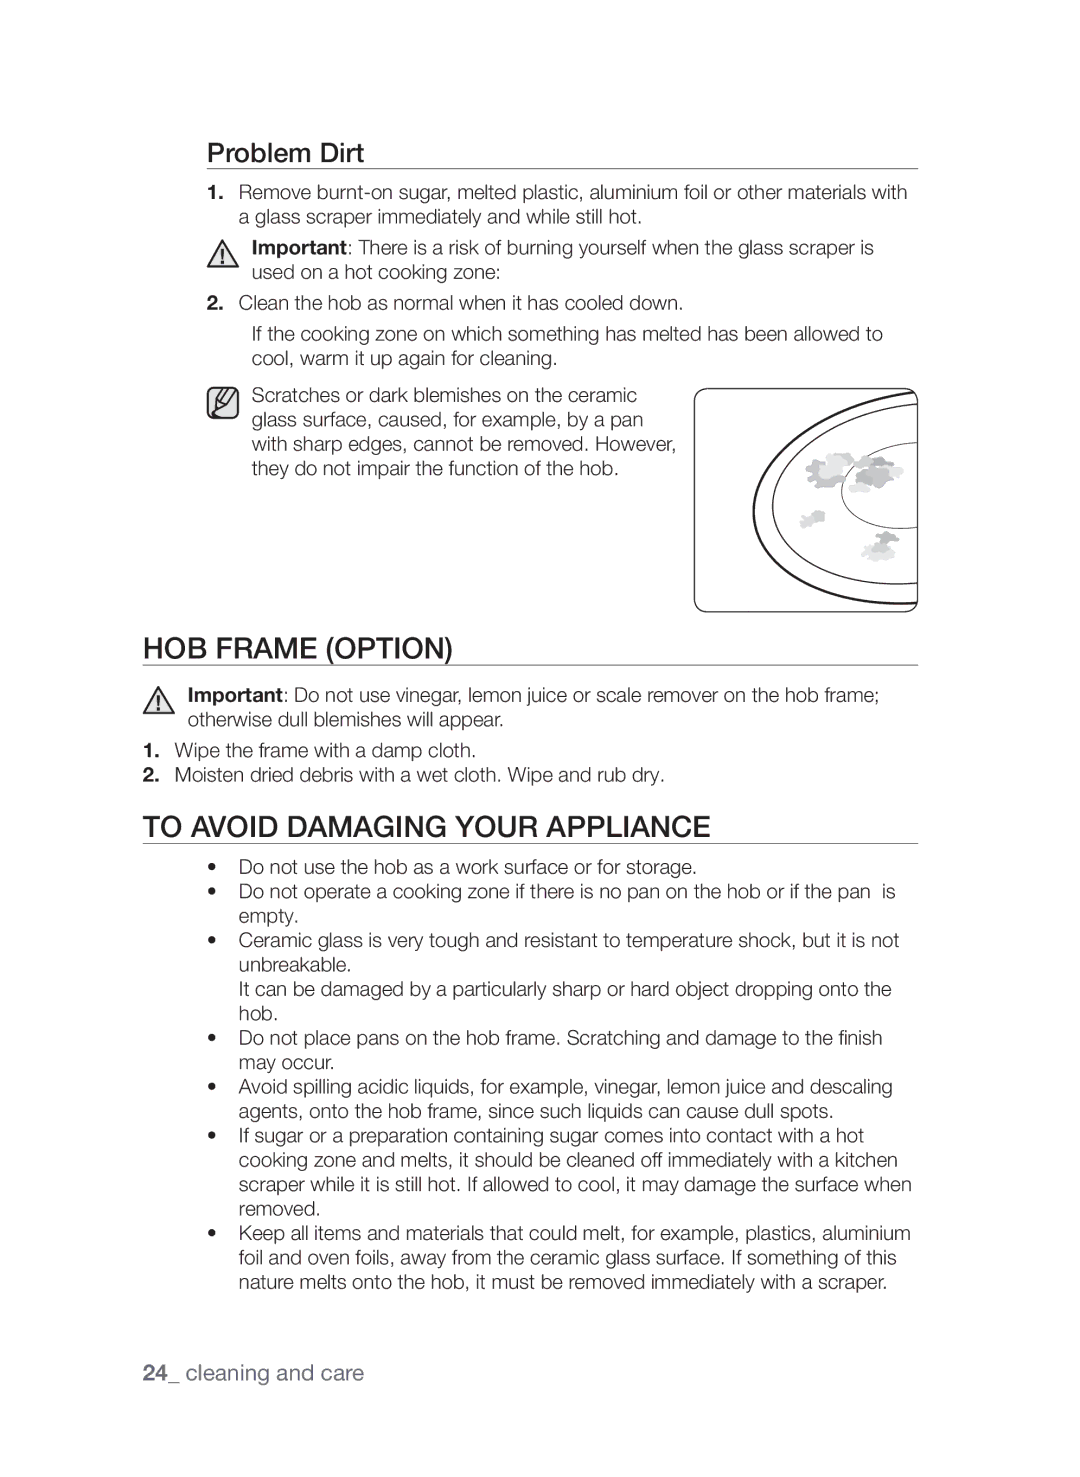 Samsung CTI613GIN/XEE, CTI613GIN/XEO manual Hob Frame Option, To avoid damaging your appliance, Problem Dirt 